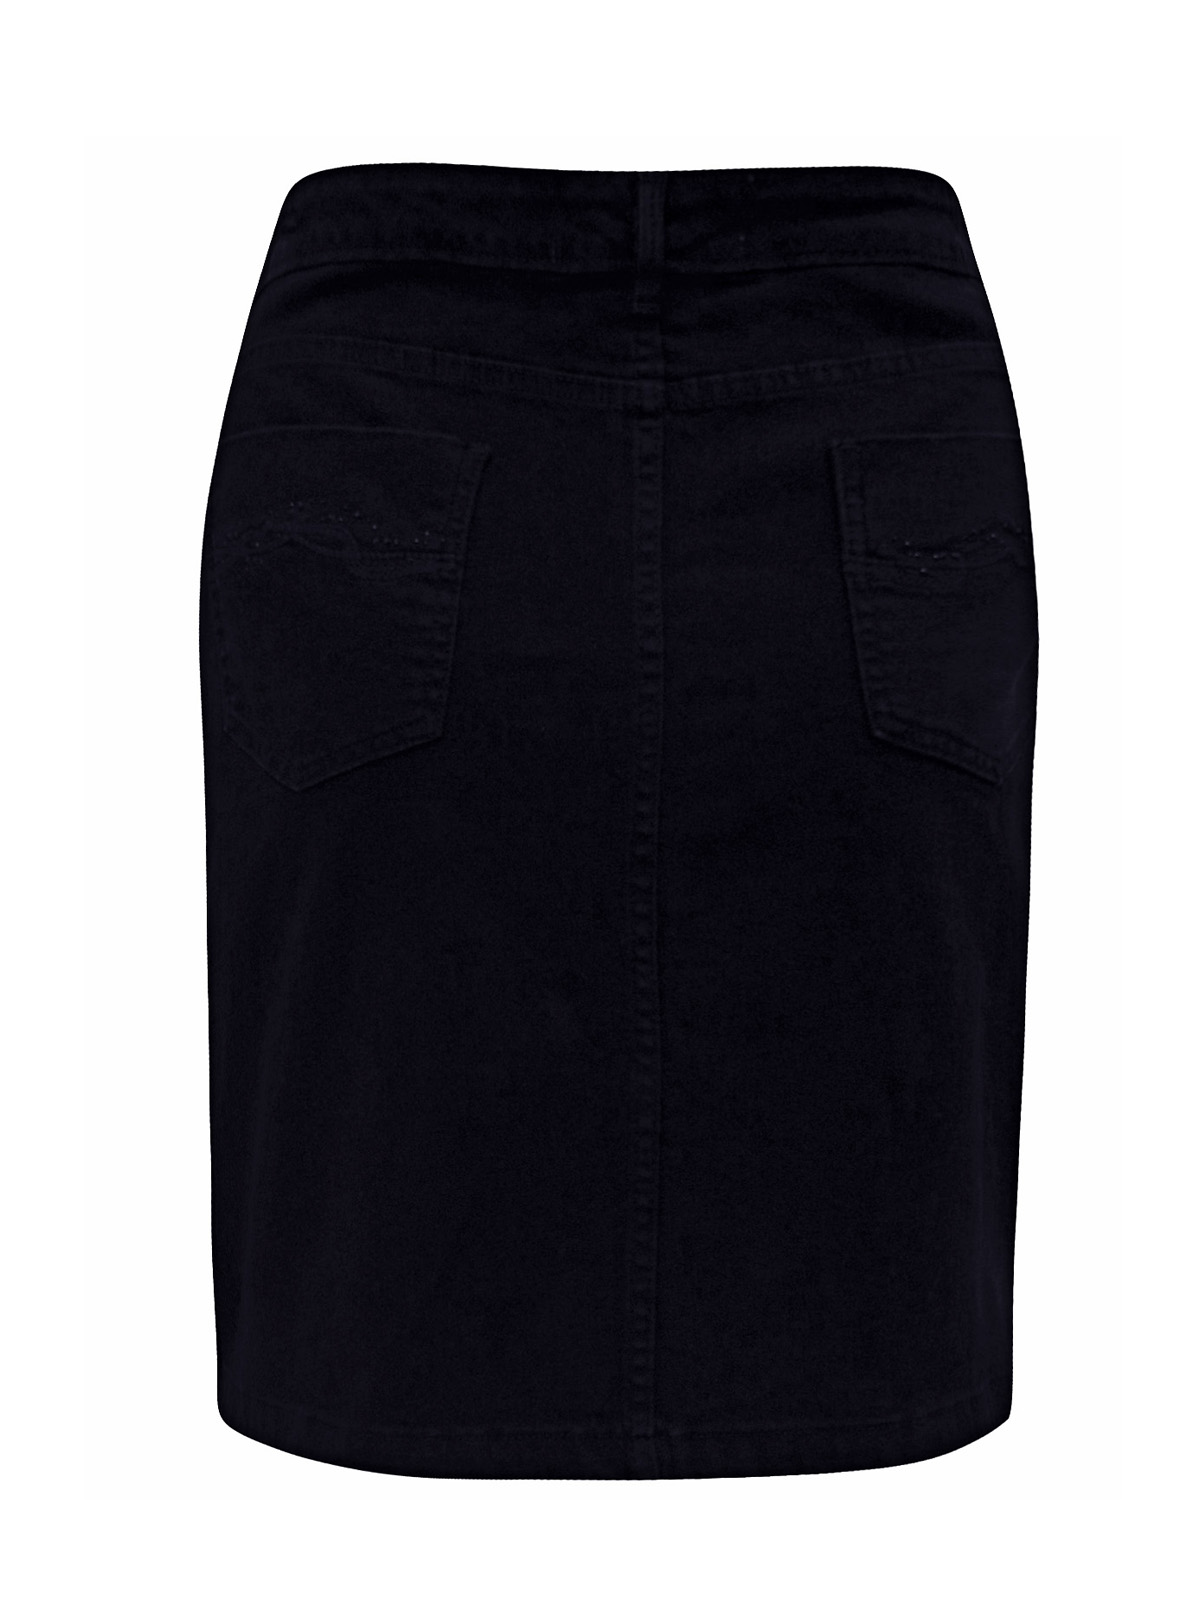 Marks and Spencer - - M&5 BLACK Cotton Rich Denim Pencil Skirt - Plus